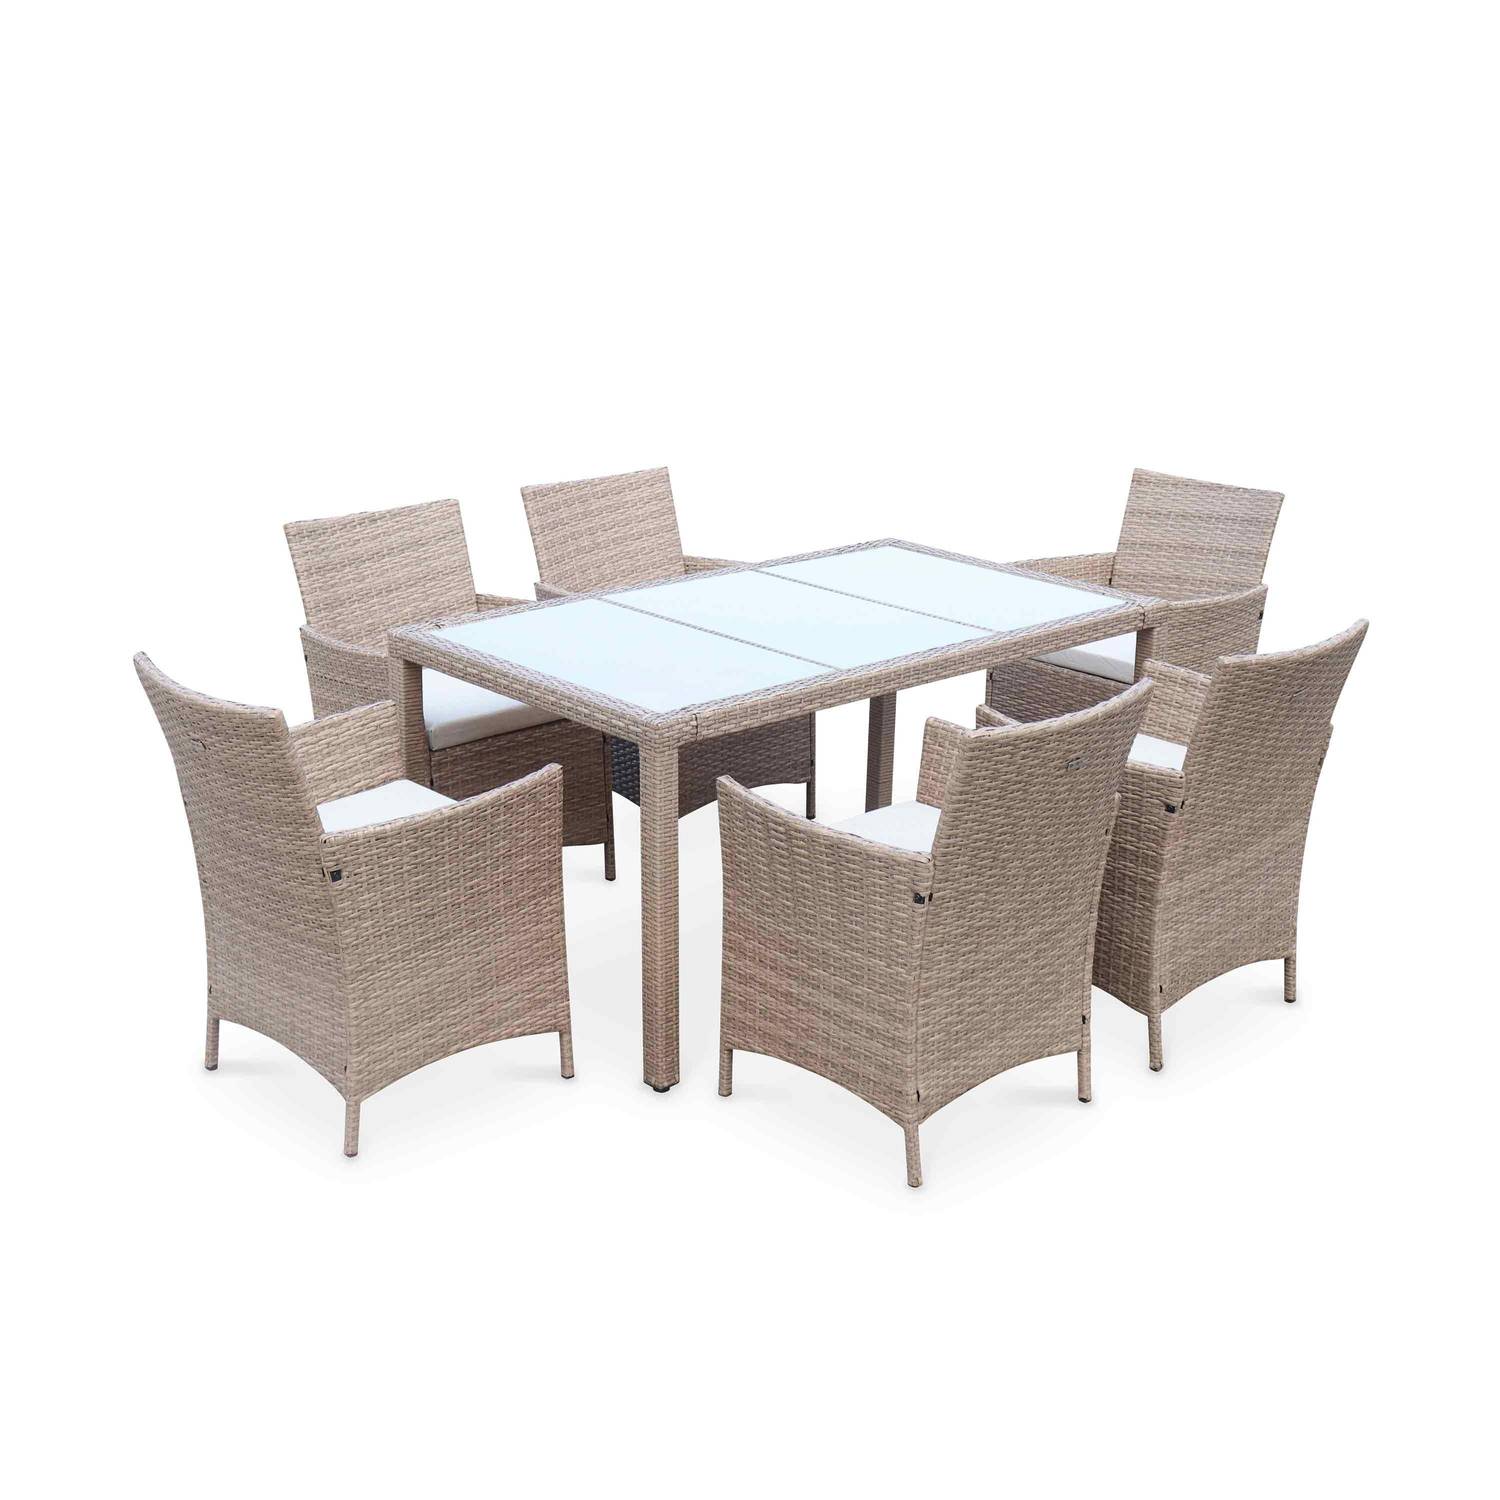 Gartengarnitur 6 Personen - Tavola 6 Natur/Beige - Kunststoffrattan, 150 cm Tisch, beige Kissen, 6 Sessel Photo1